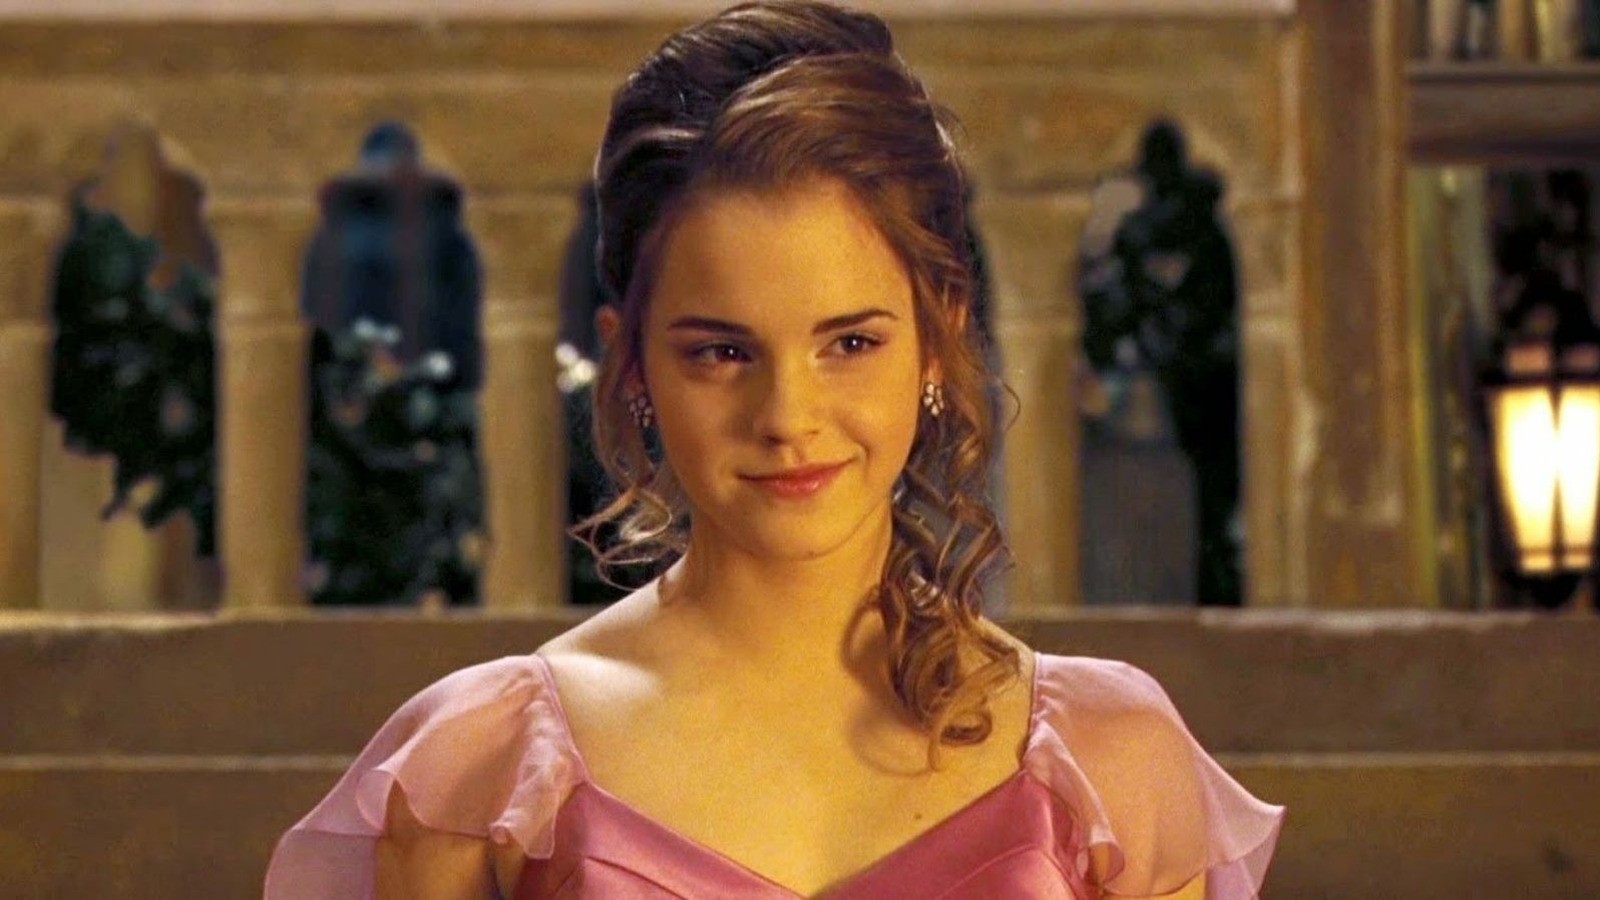 Emma Watson's off-screen rumors with Robert Pattinson